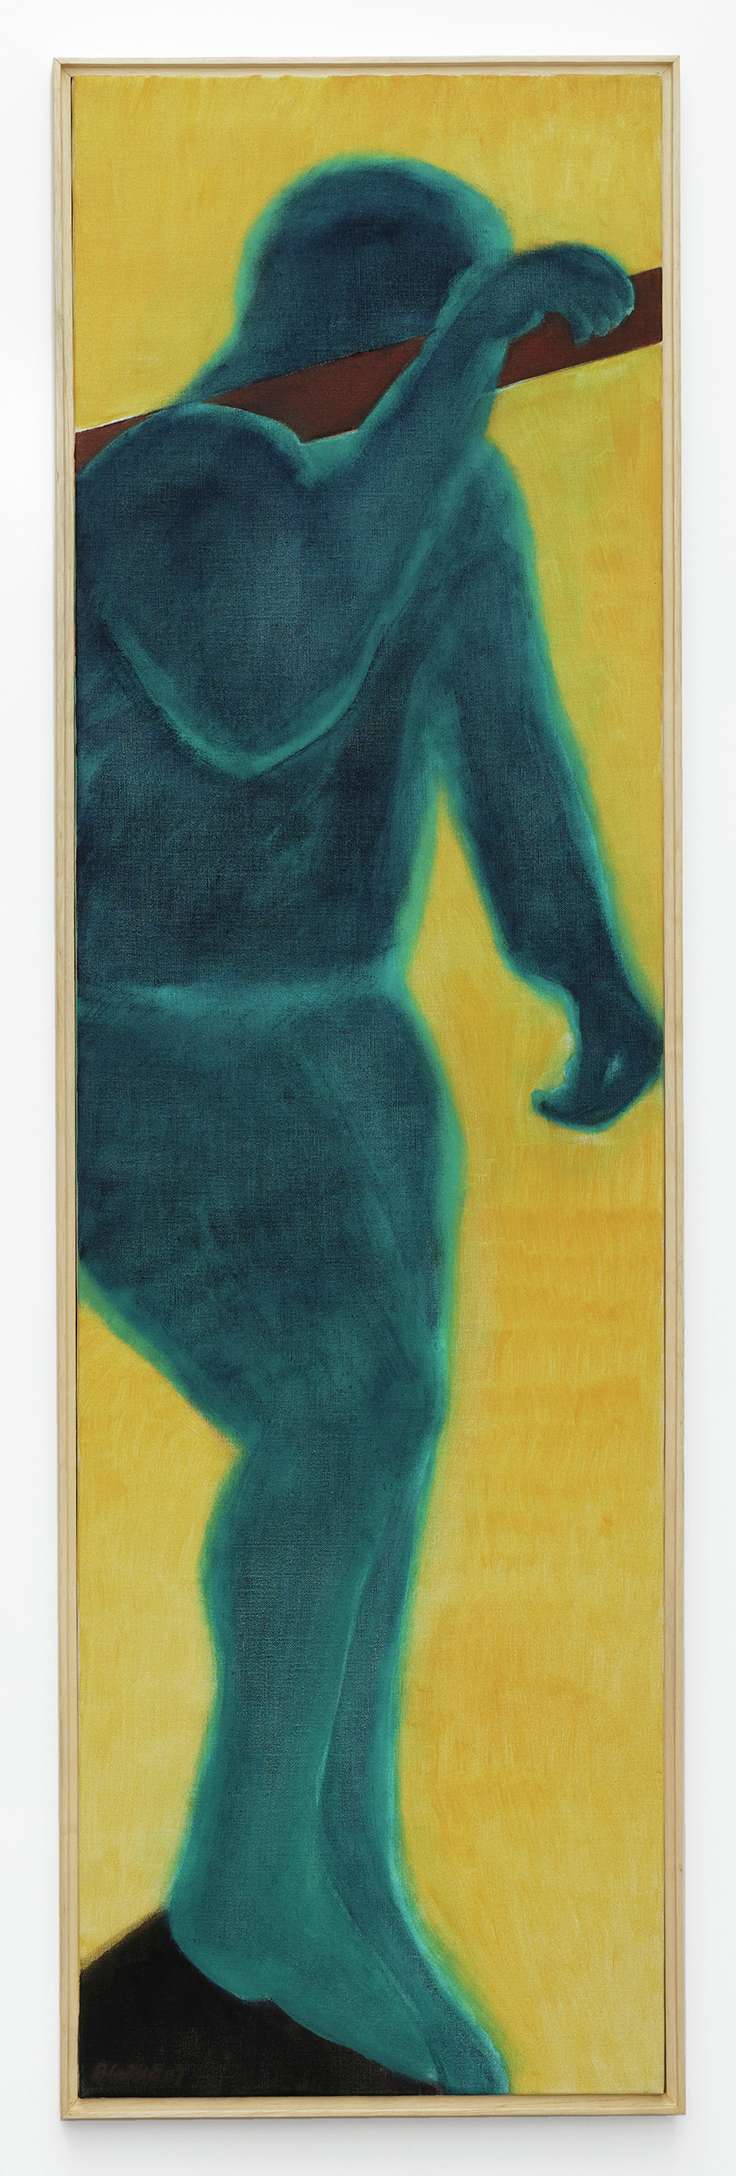 Beatriz González, 501 NN, 2007 Huile sur toile155 × 45 cm / 61  × 17 6/8 in.158 × 48 cm / 62 2/8 × 18 7/8 in. (encadré/framed)